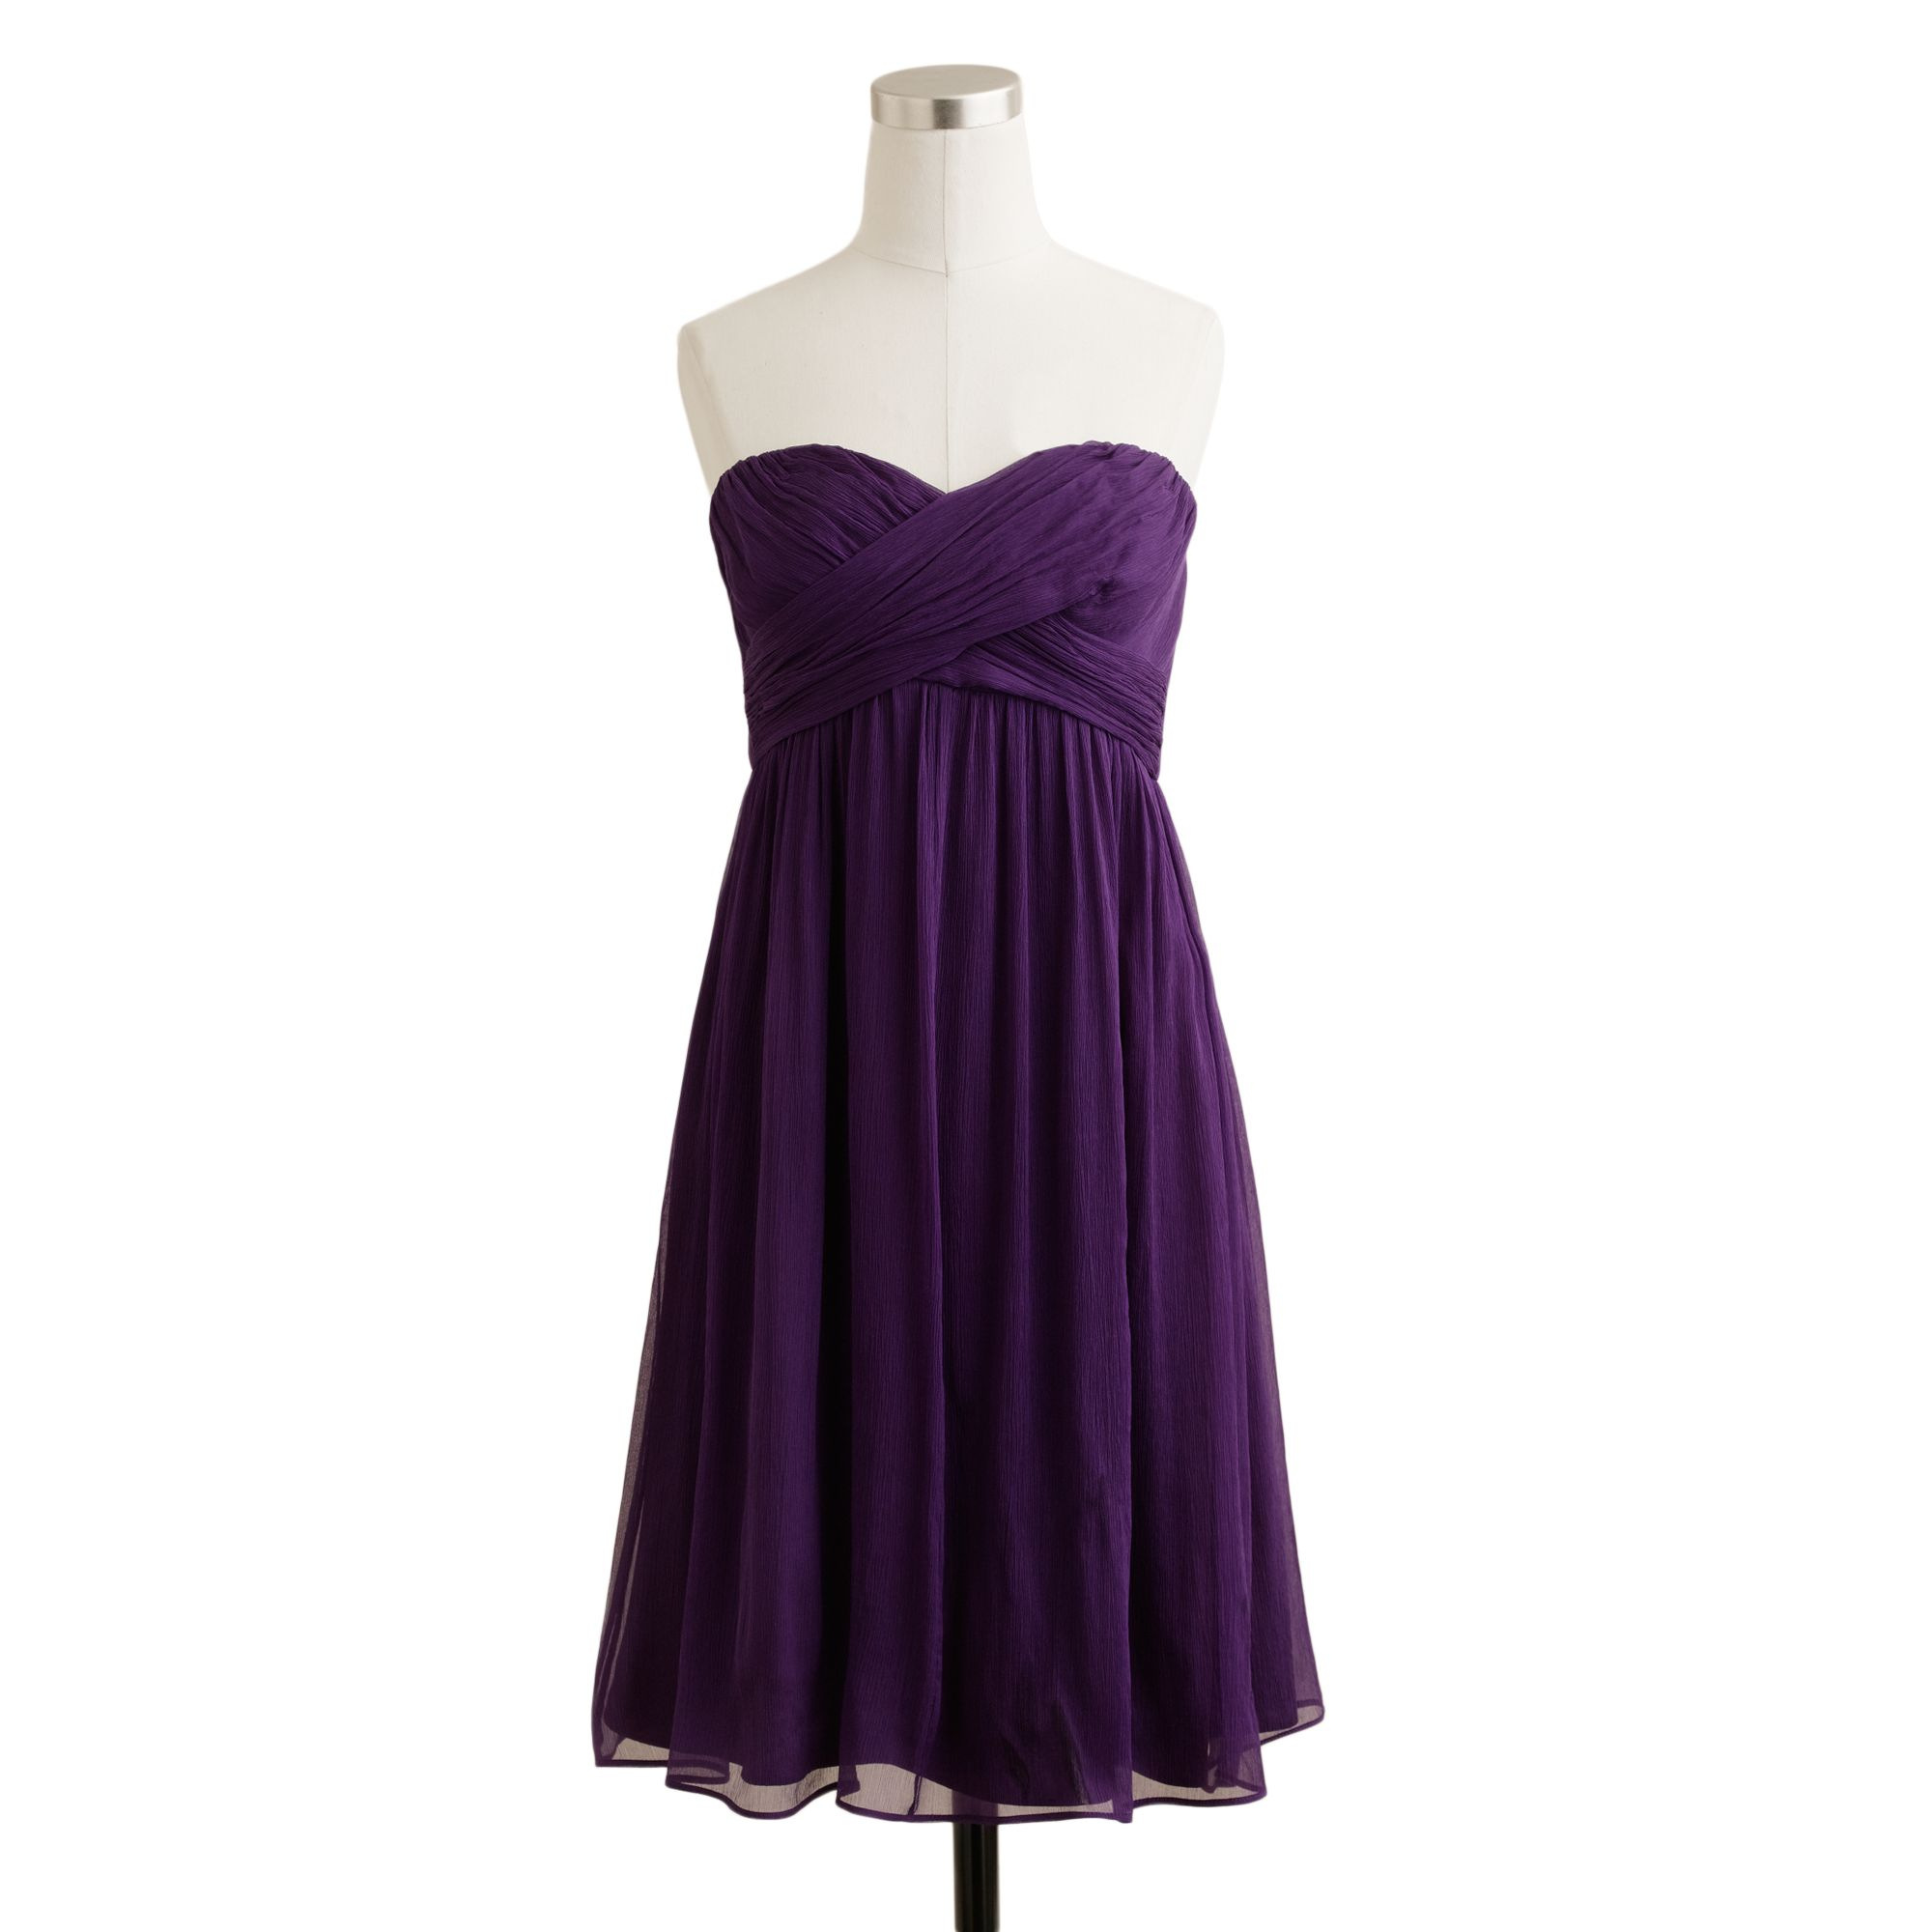 J.crew Taryn Dress in Silk Chiffon in Purple | Lyst